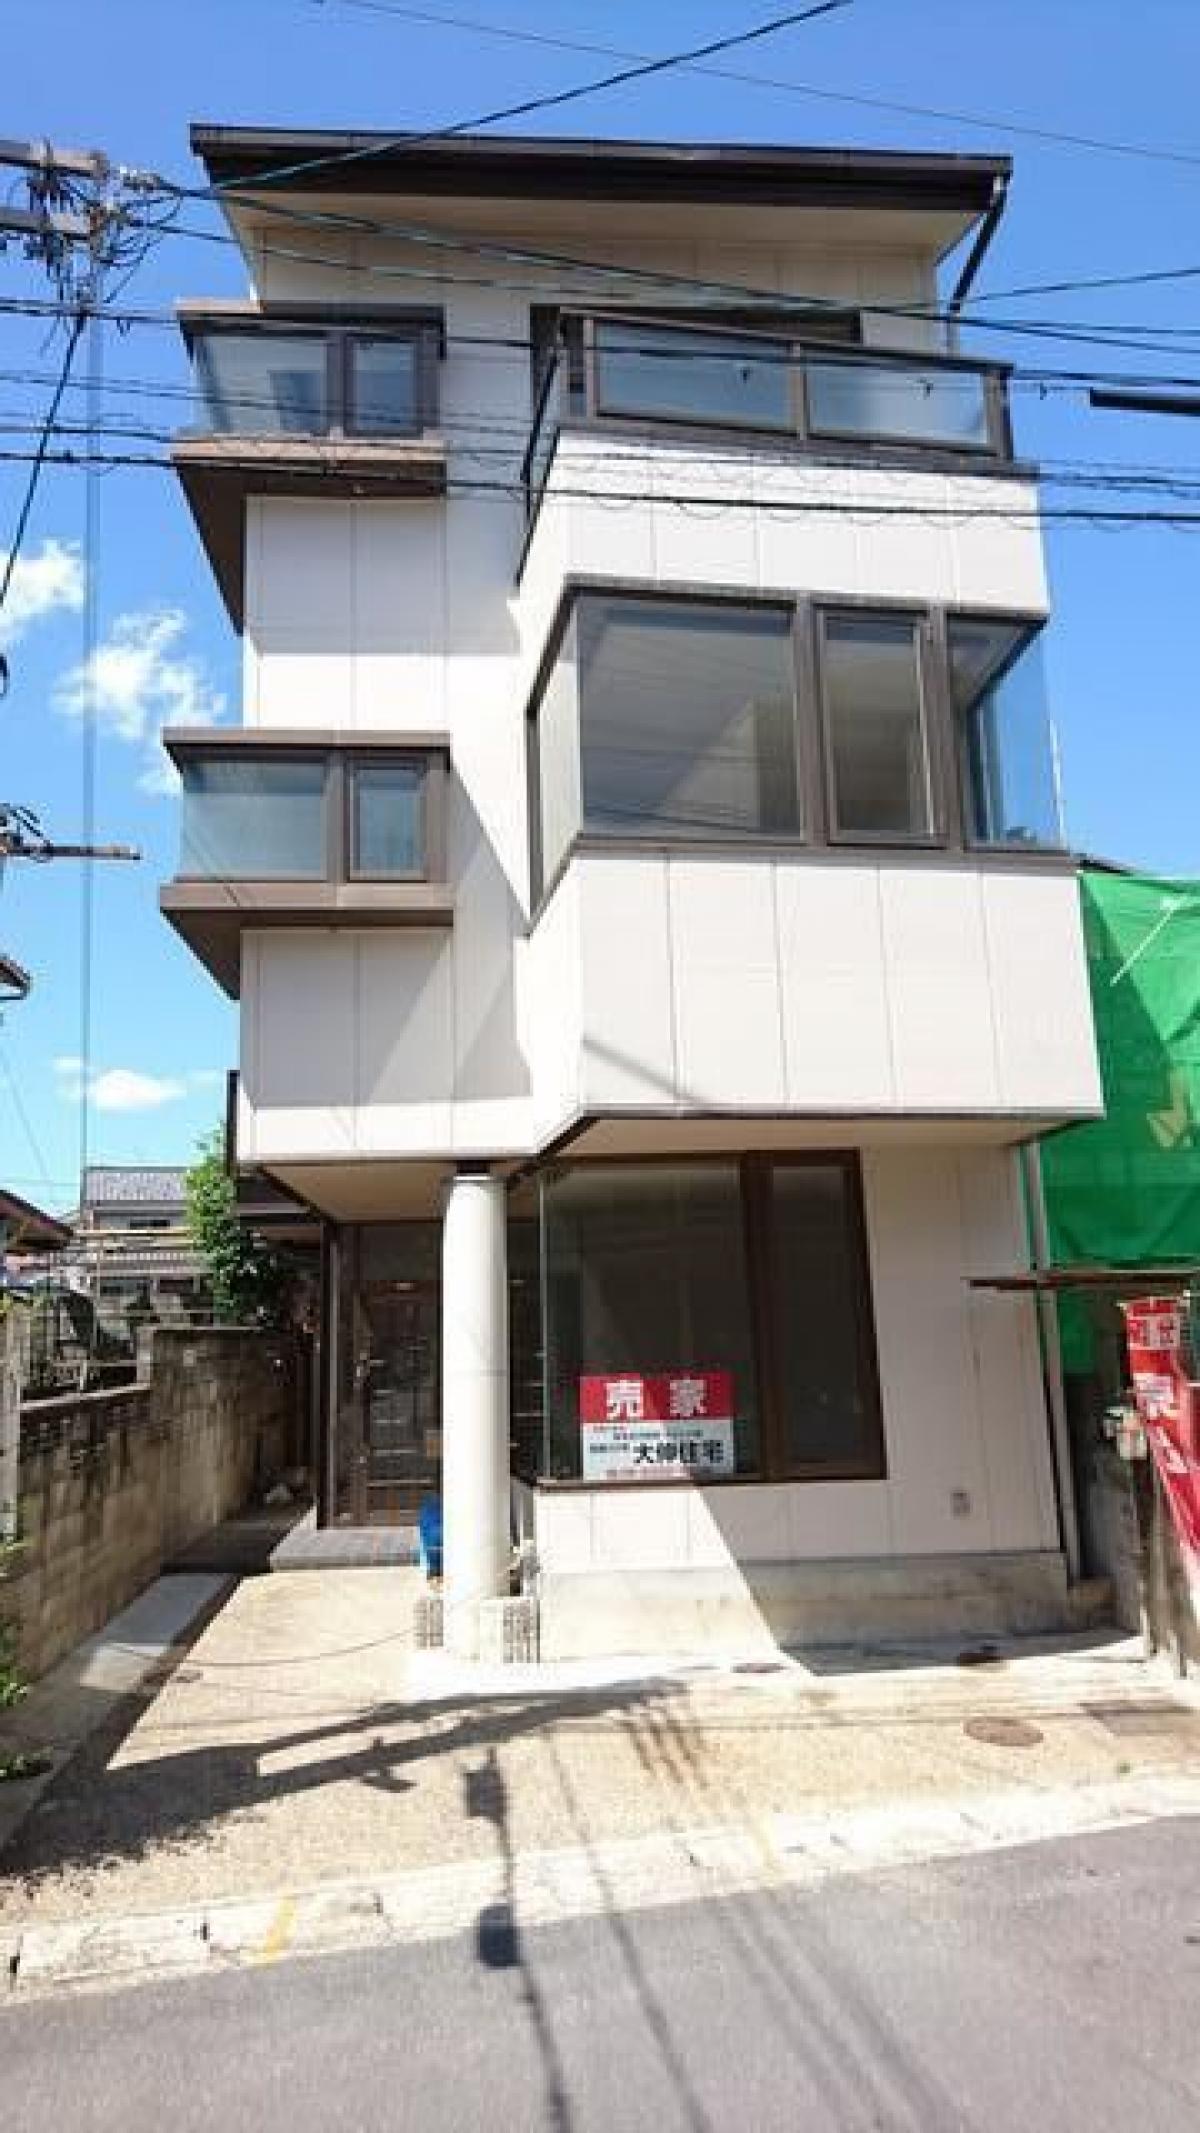 Picture of Home For Sale in Kyoto Shi Yamashina Ku, Kyoto, Japan